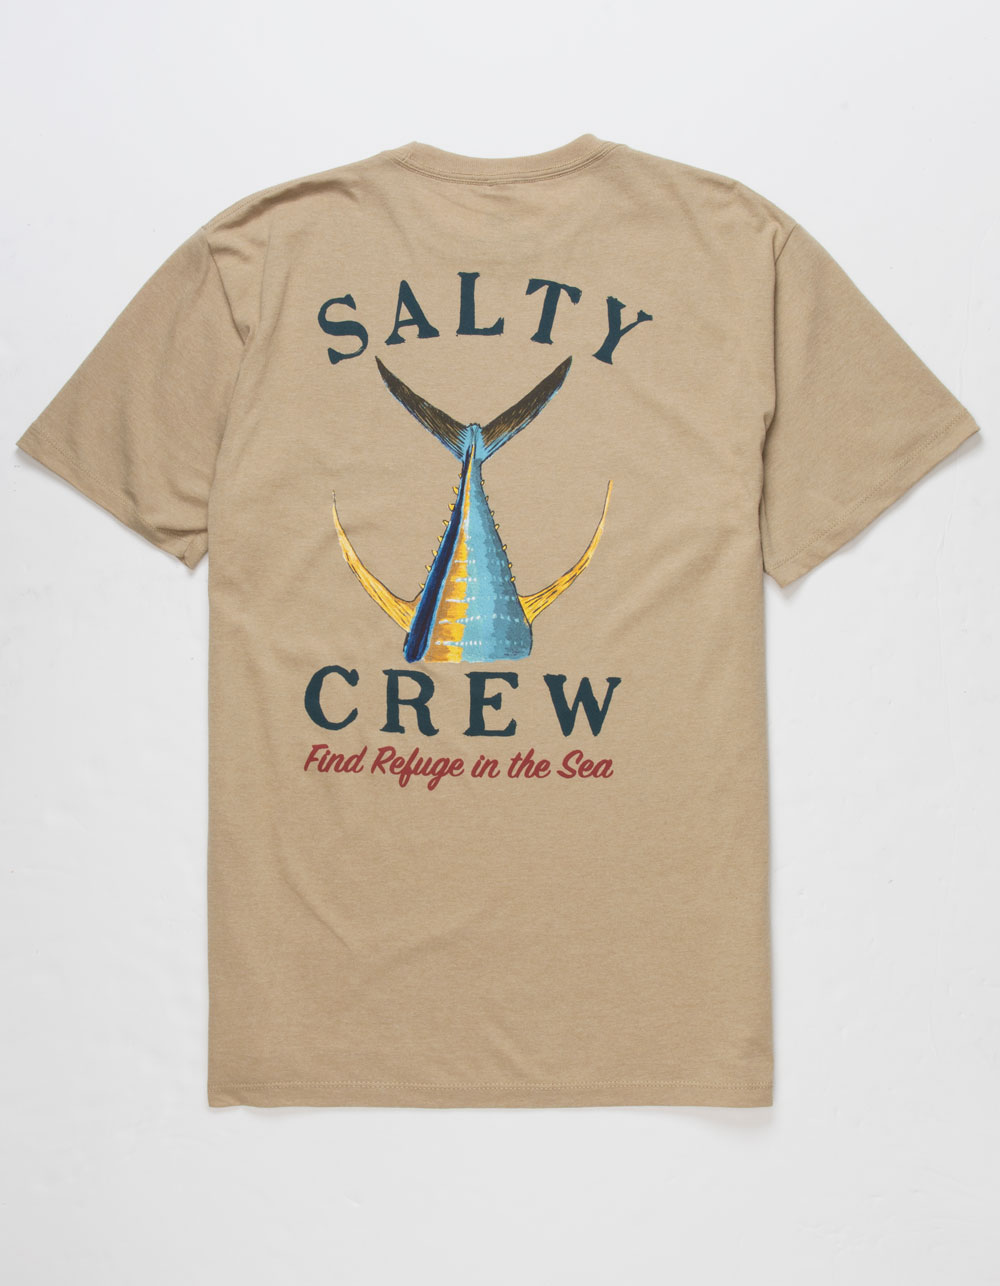 SALTY CREW Tailed Refuge Mens Tee - SAND | Tillys